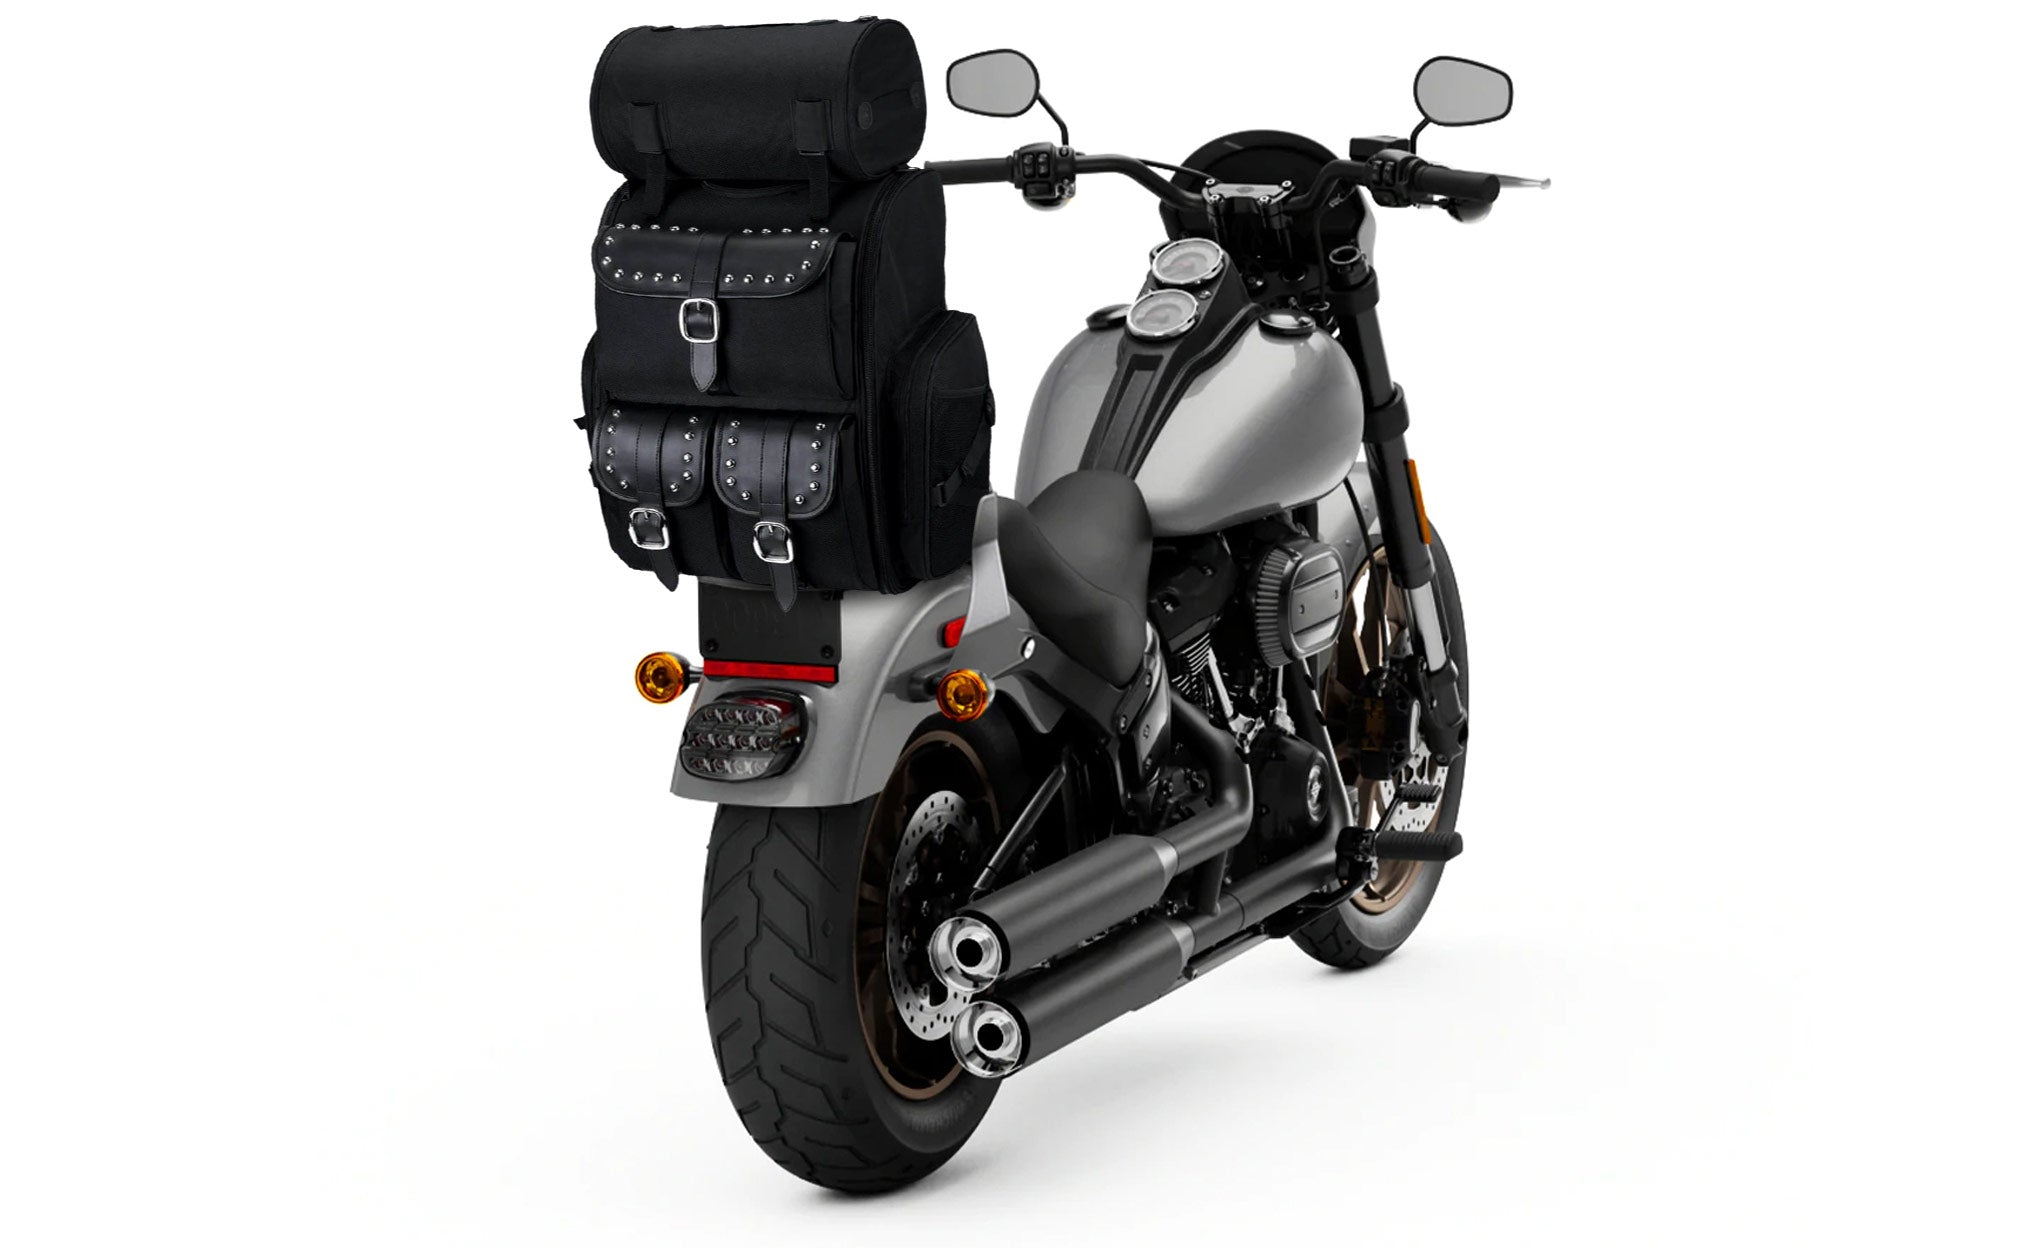 Viking Highway Extra Large Studded Yamaha Motorcycle Sissy Bar Bag Bag on Bike View @expand